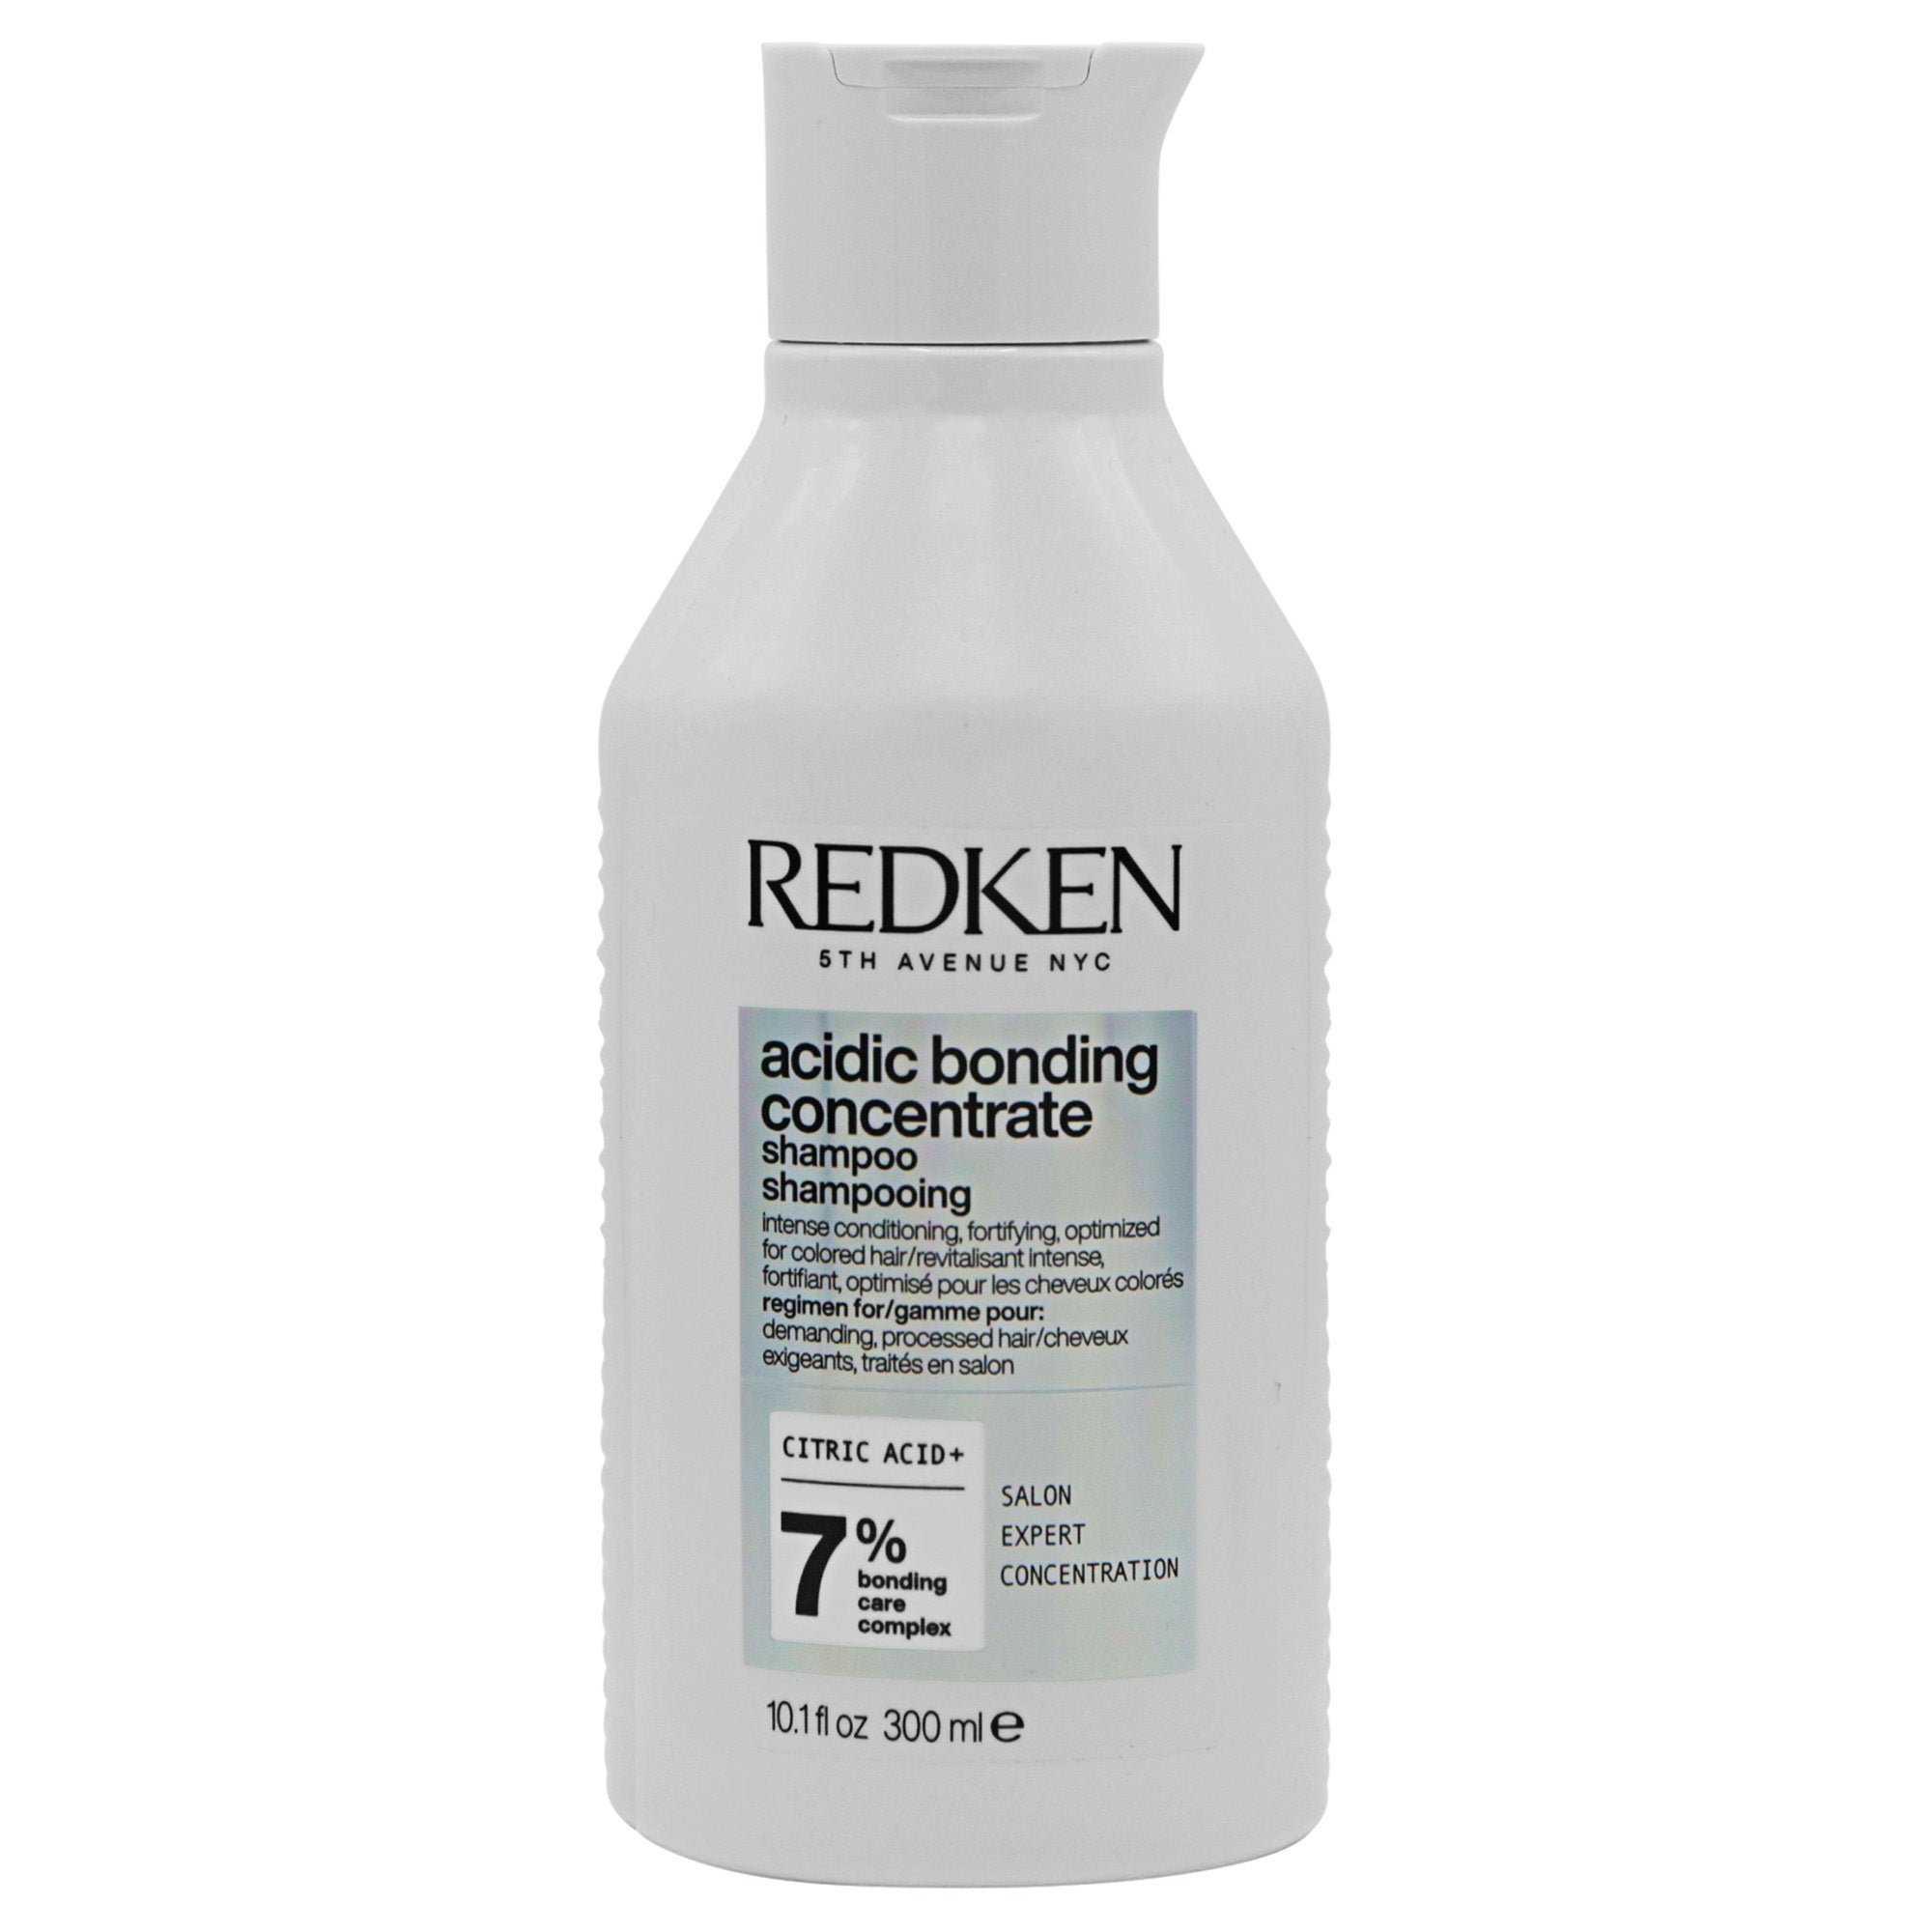 Redken Acidic Bonding Concentrate Shampoo 300ml | OZ & Beauty